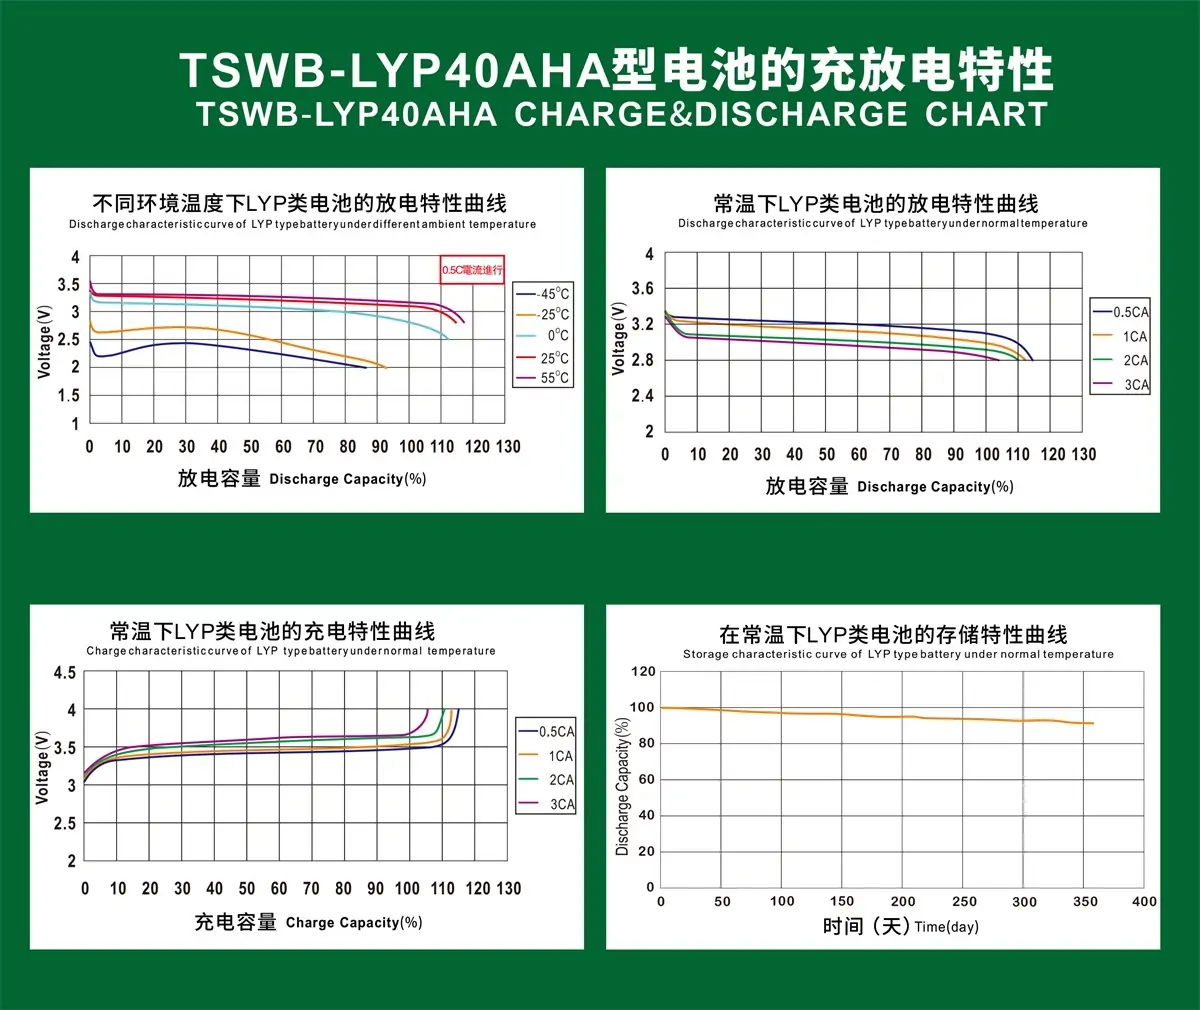 TSWB-LYP40AHA CHARGE&DISCHARGE CHART